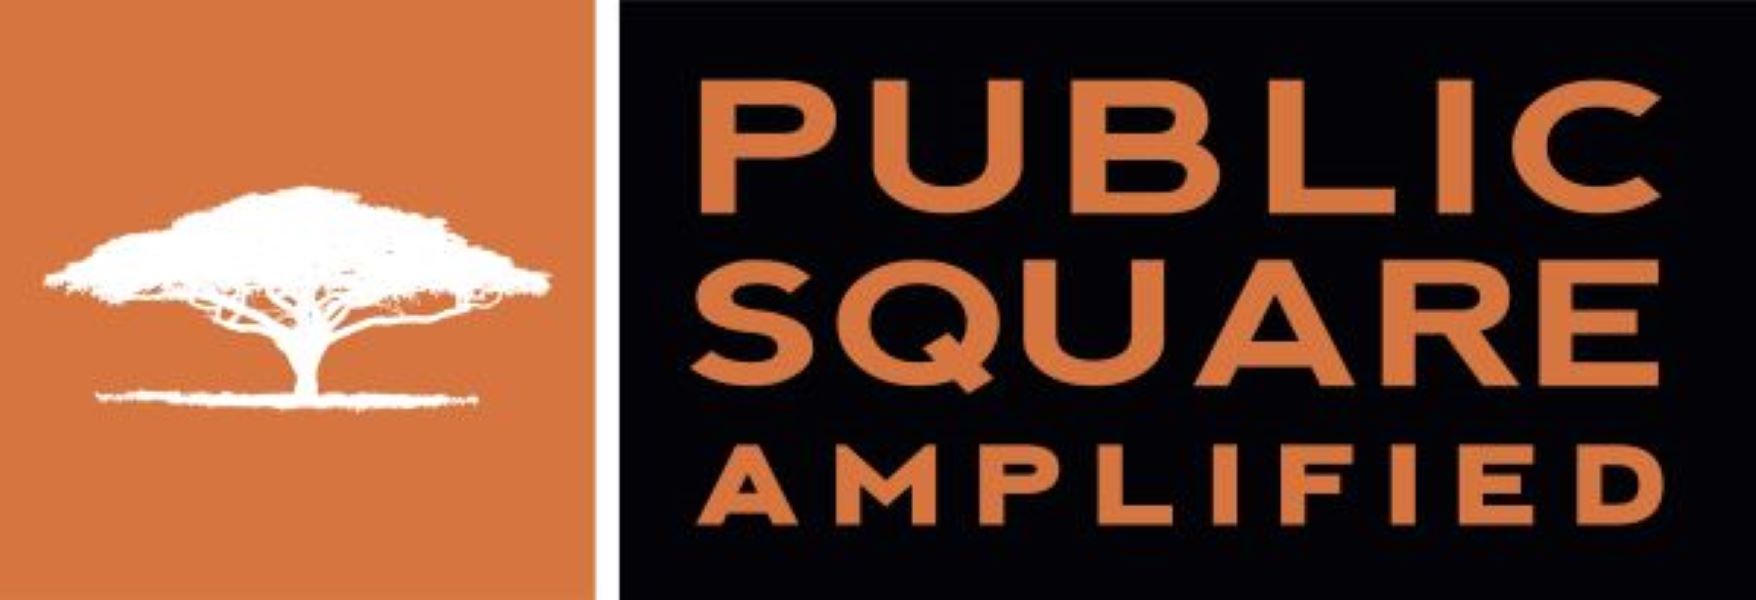 Public Square Amplified logo